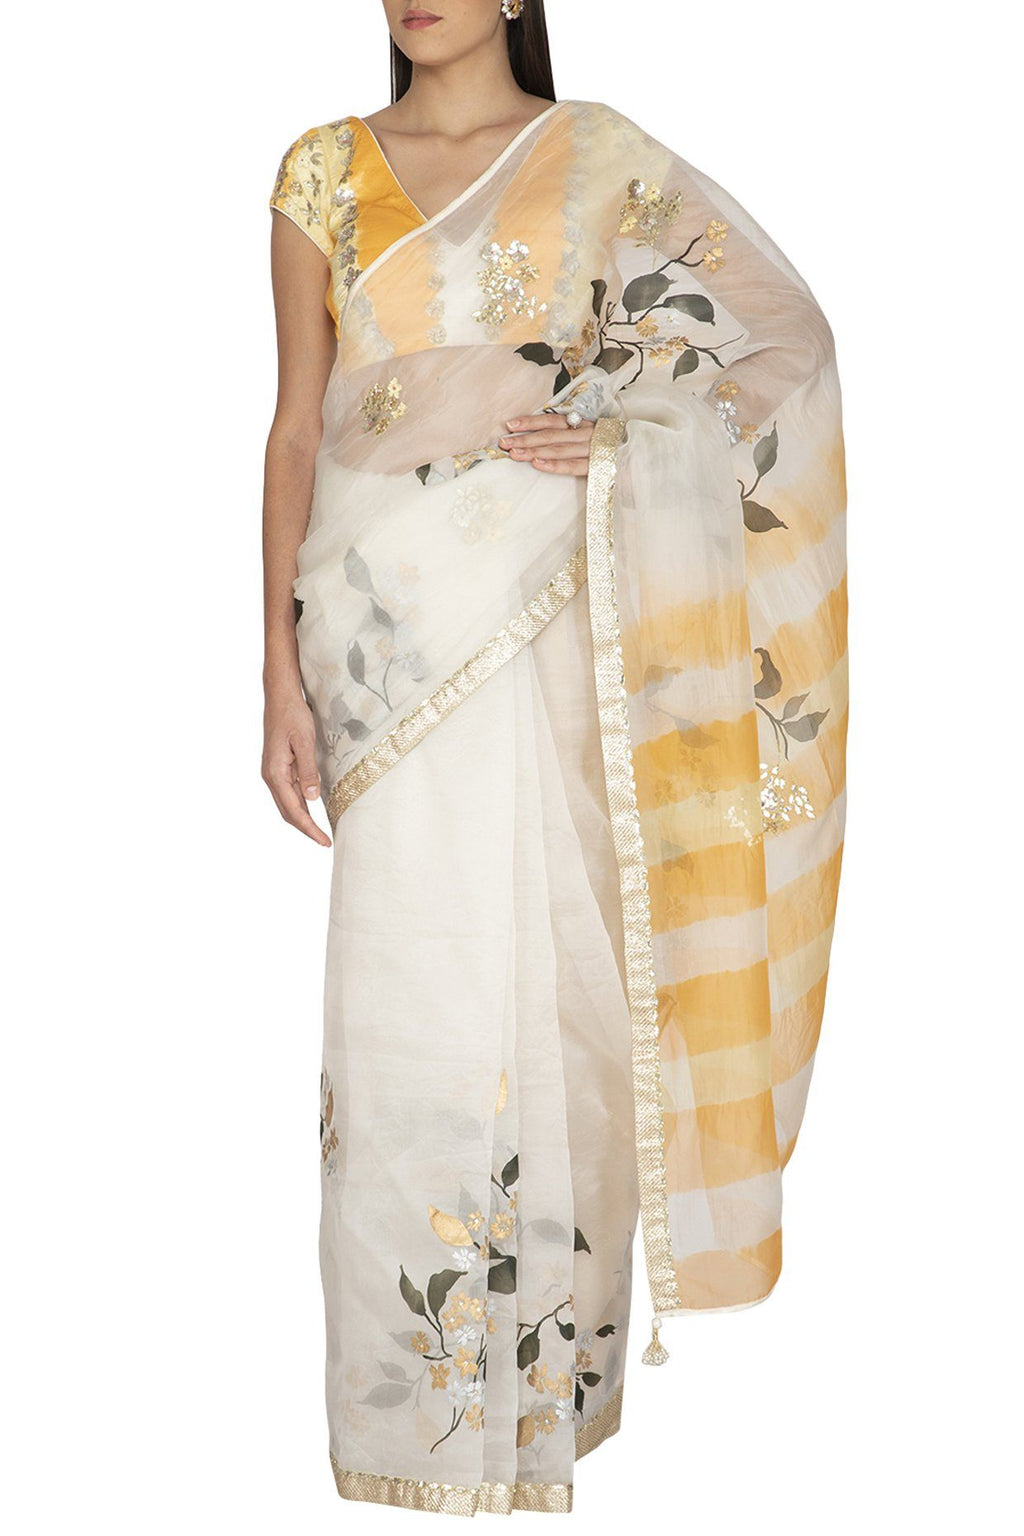 Ivory Hand Painted Saree with Yellow Tie & Dye Gajji Silk Blouse - devnaagri